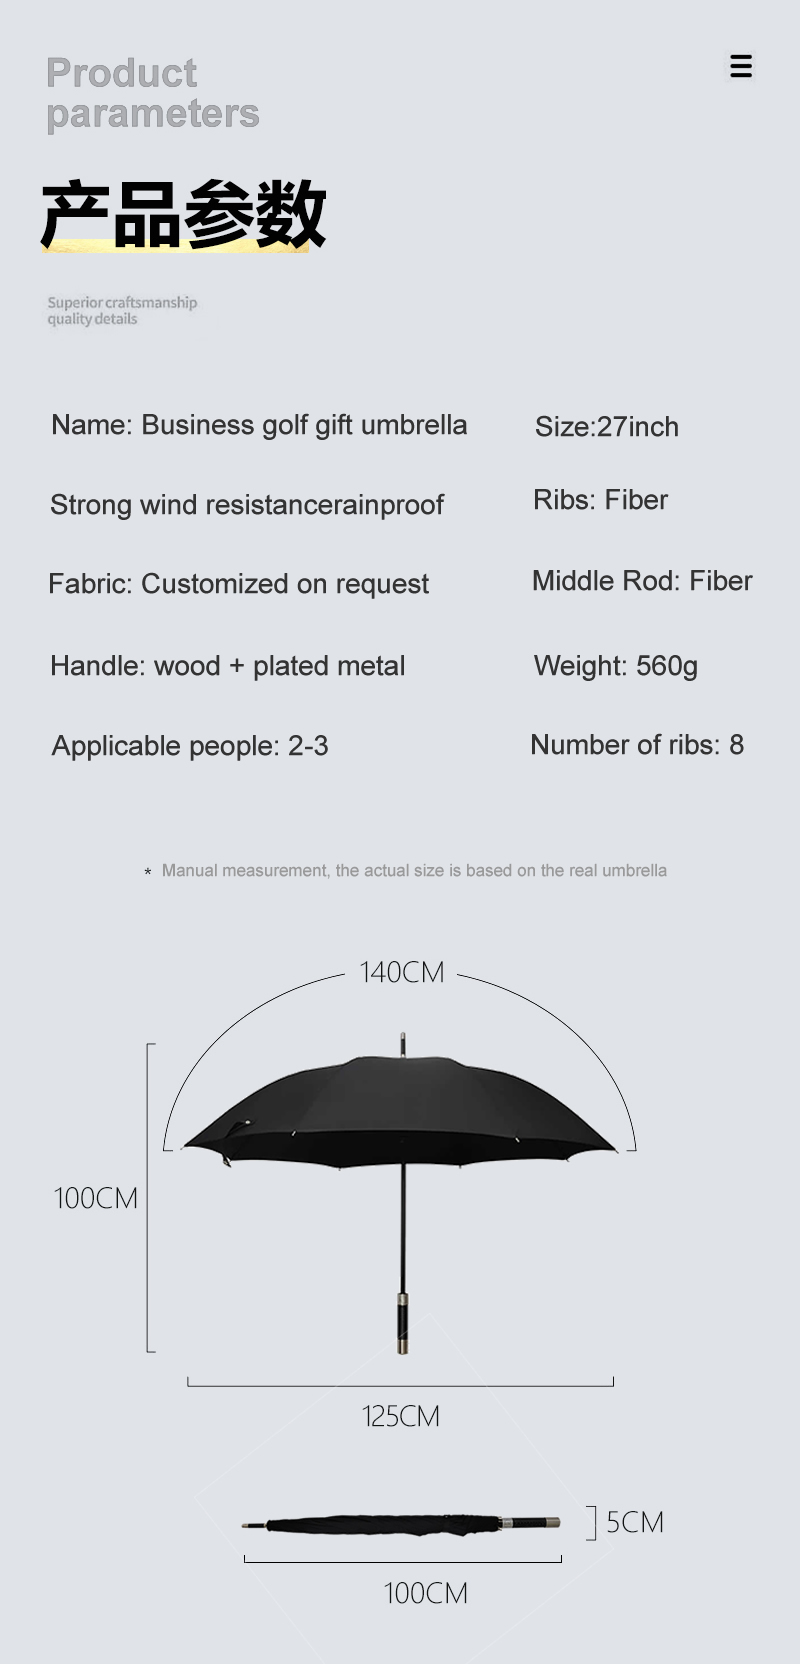 Umbrella parameter map